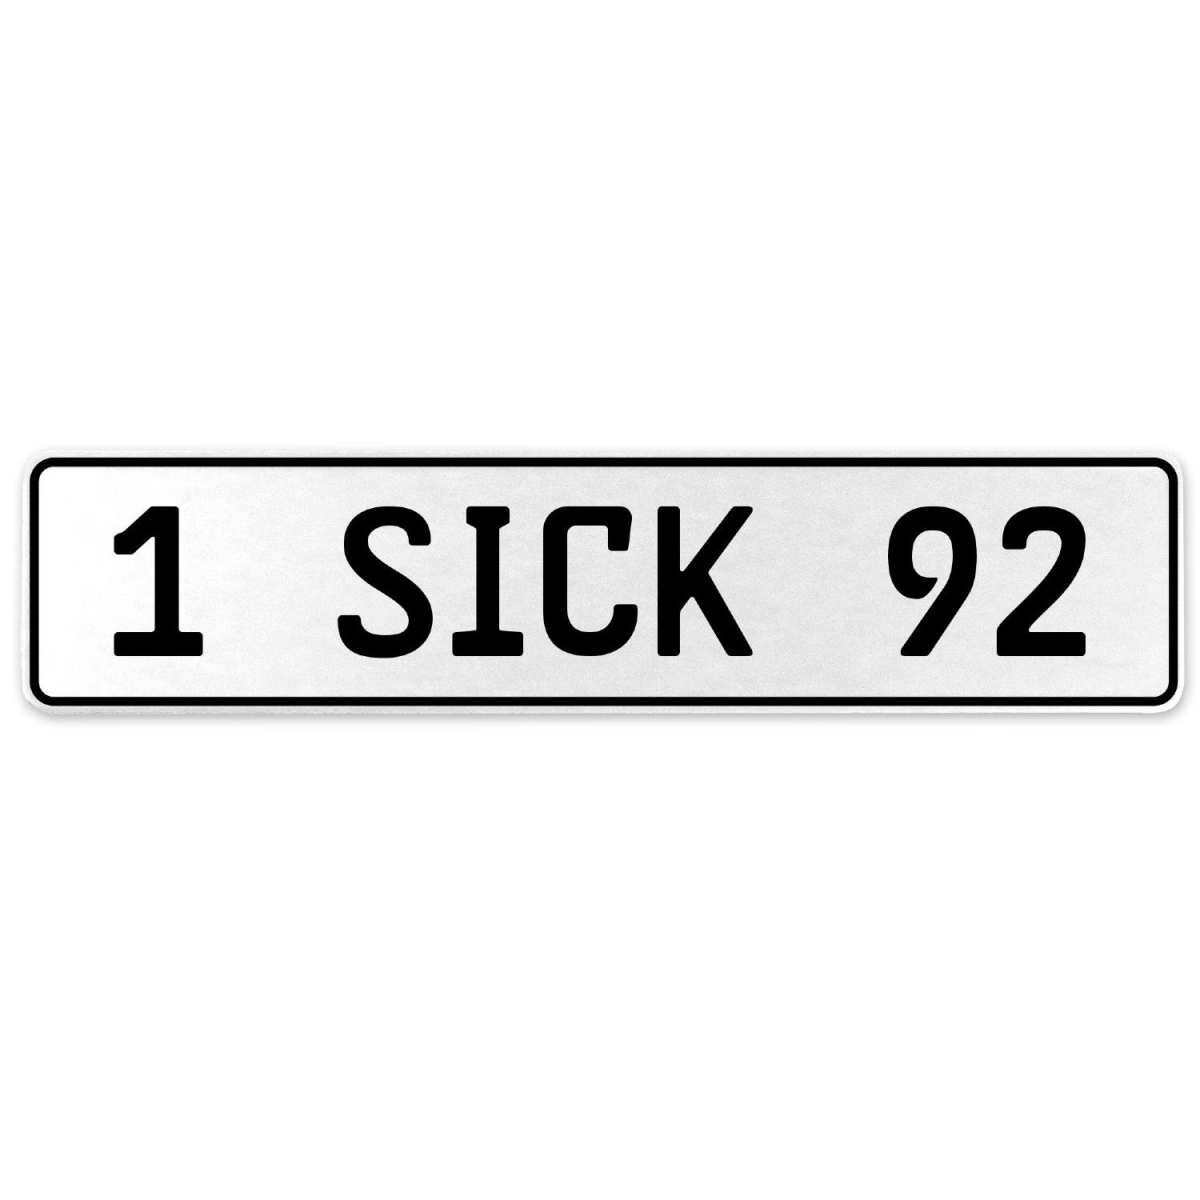 554491 1 Sick 92 - White Aluminum Street Sign Mancave Euro Plate Name Door Sign Wall